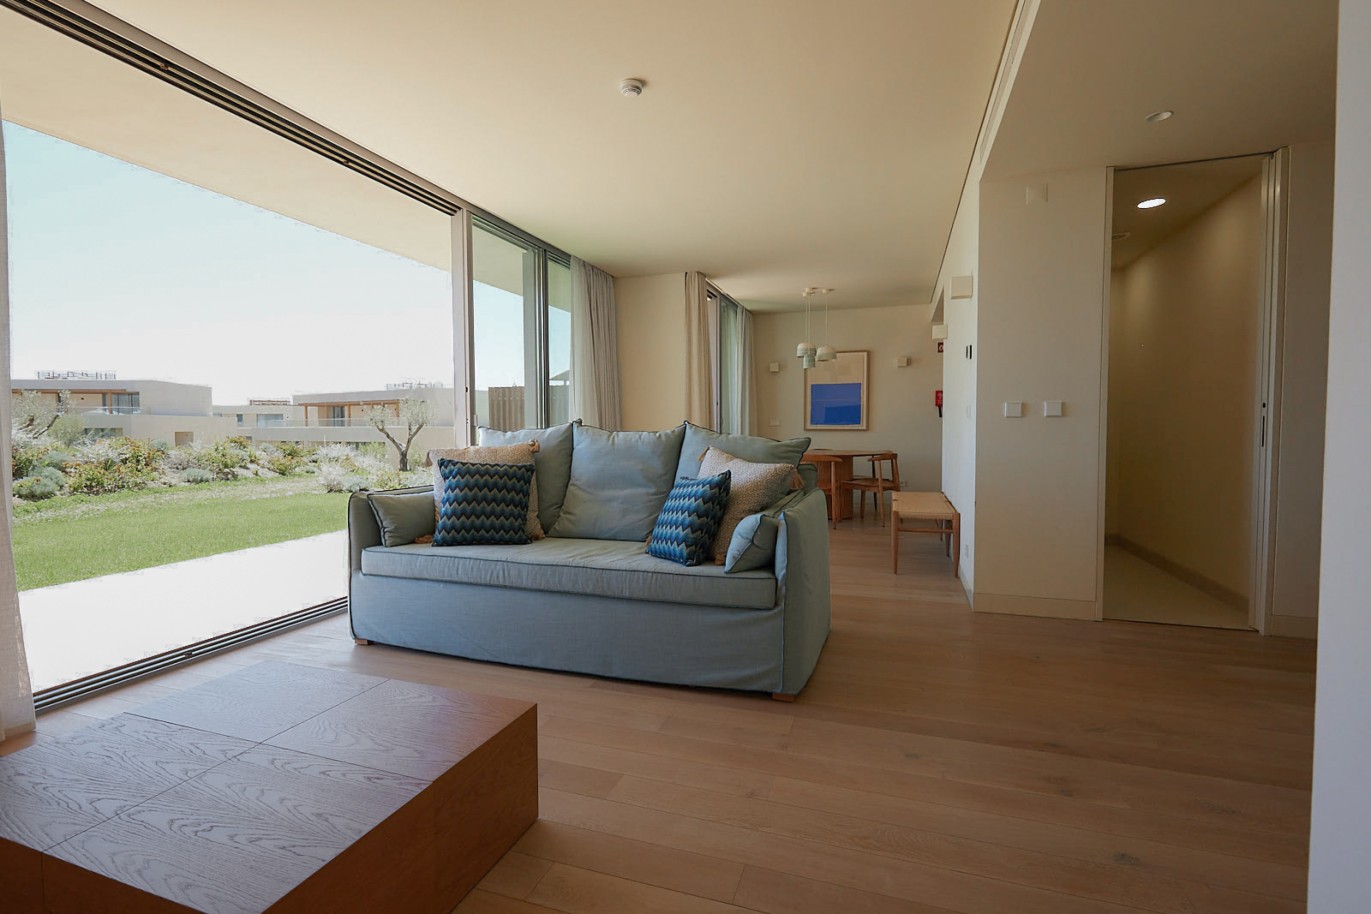 2 bedroom apartment in resort, for sale in Porches, Algarve_230544